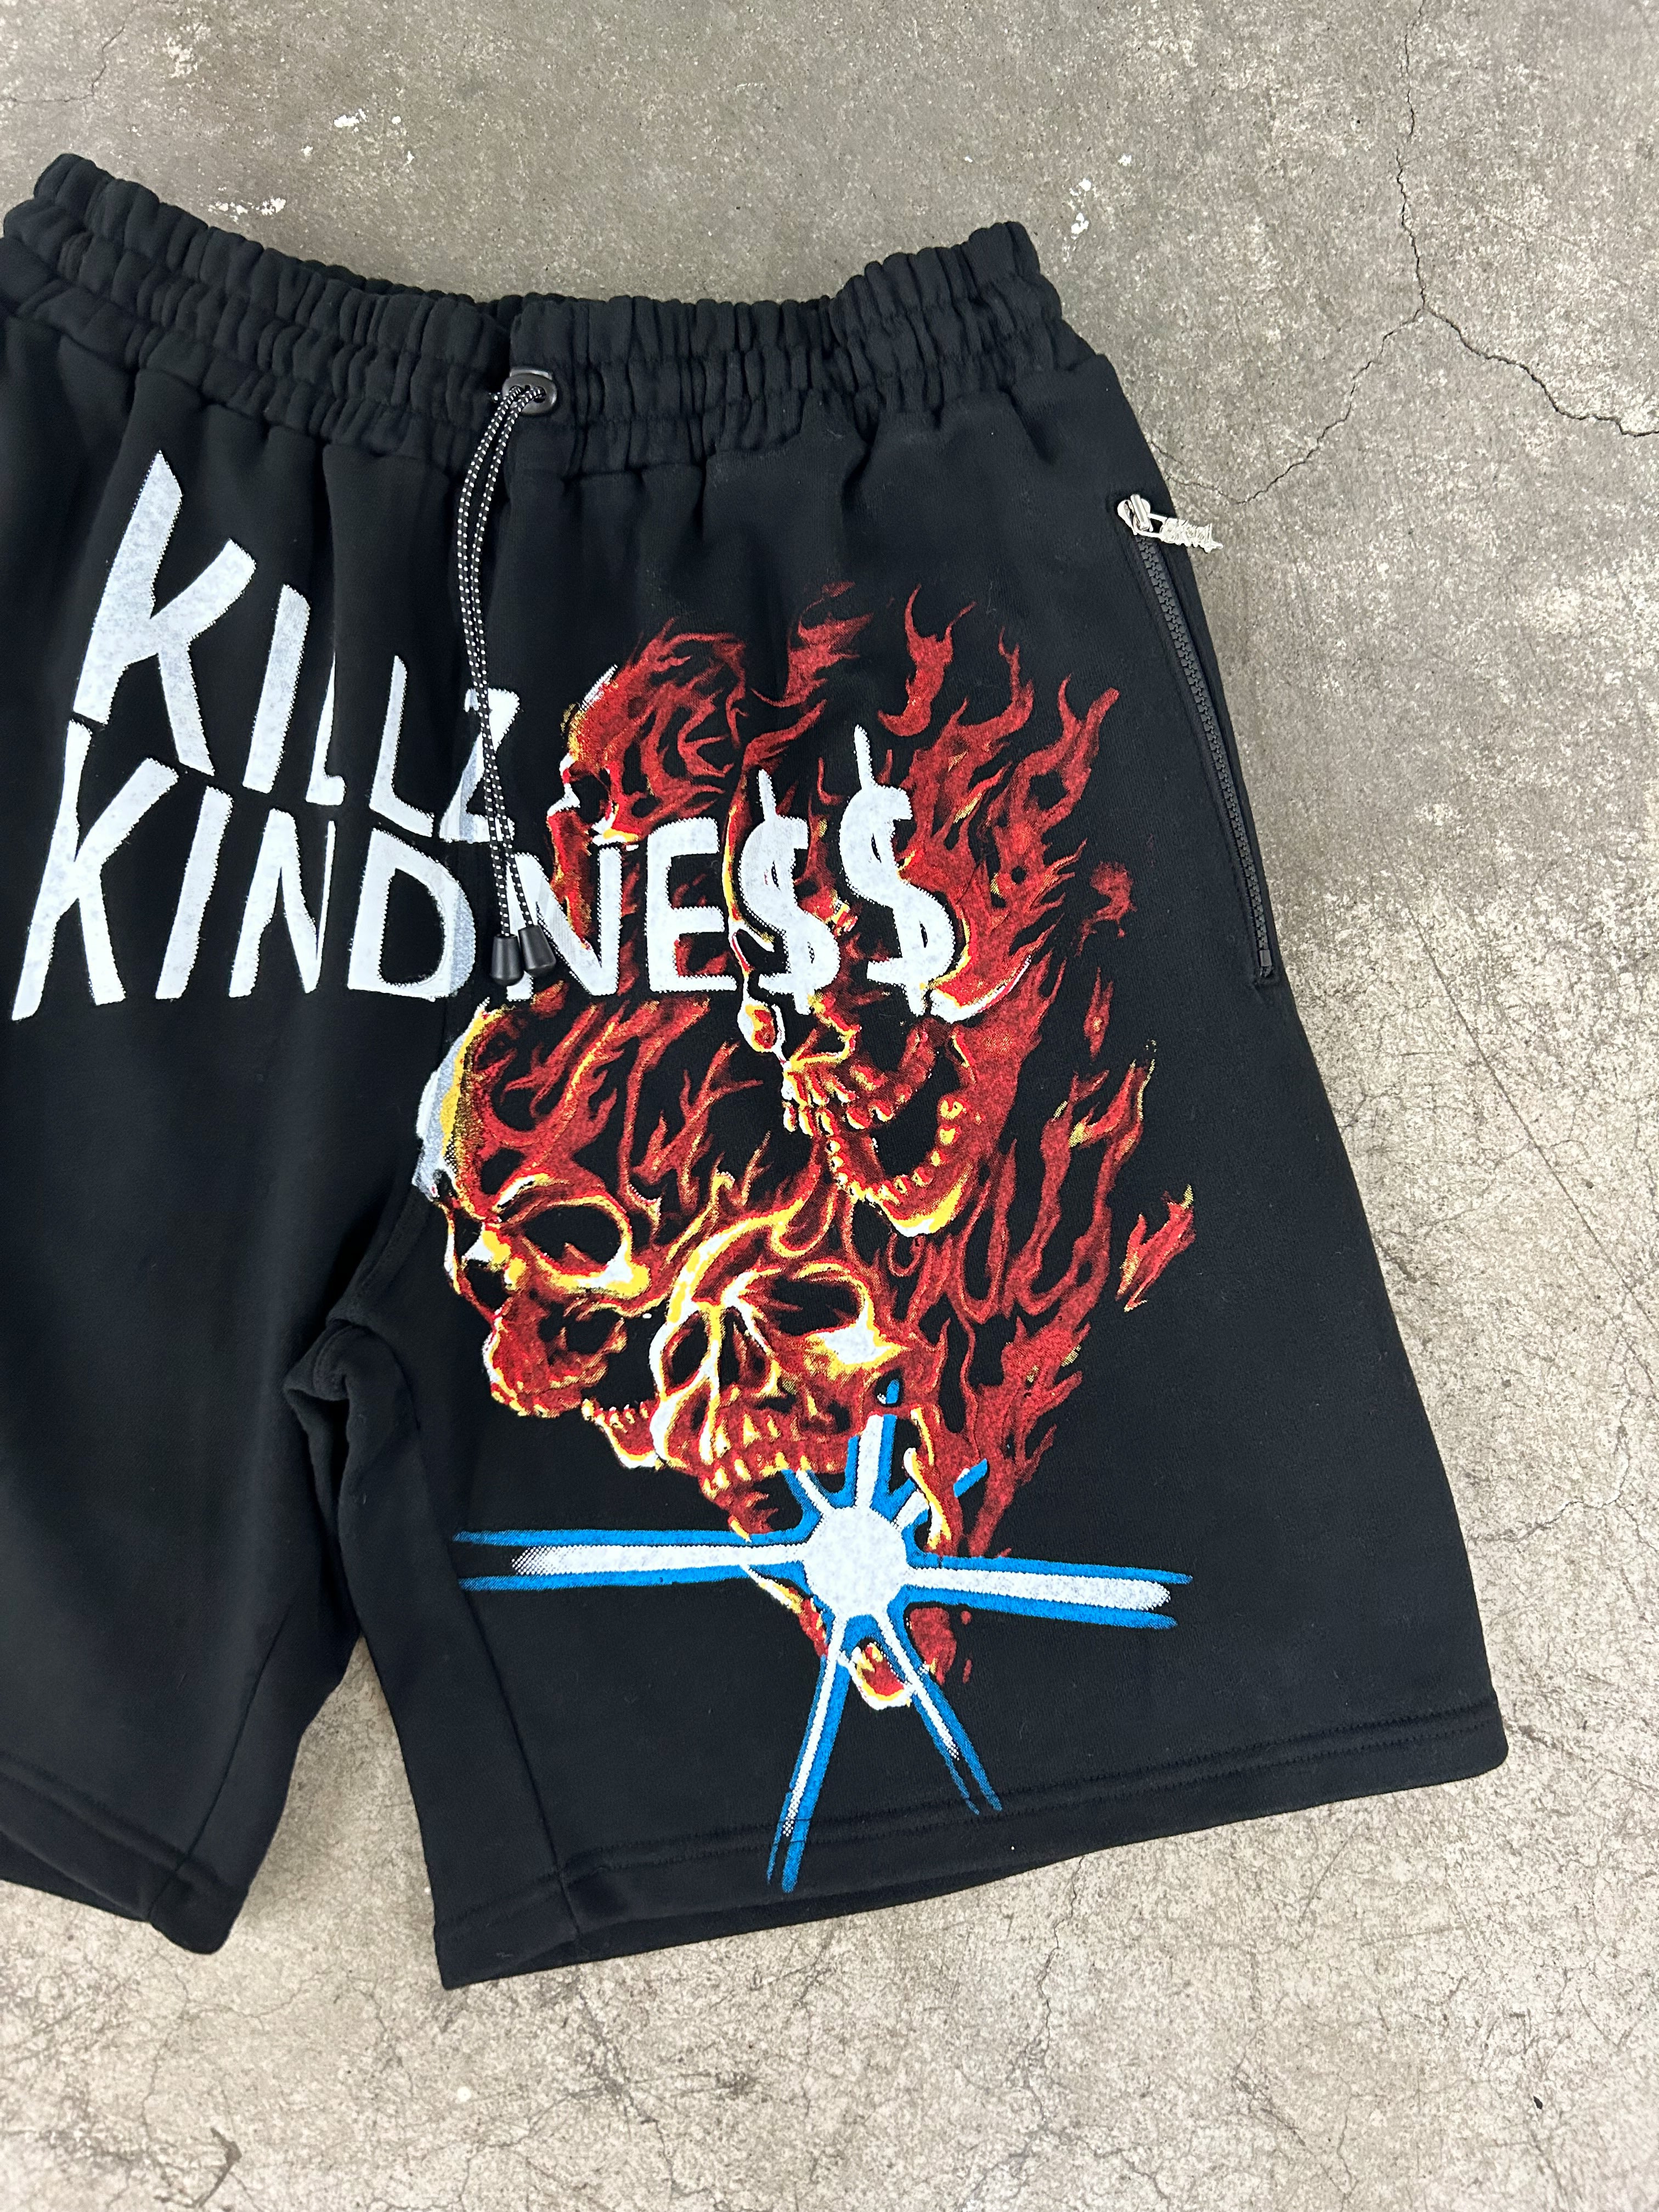 Kindness Killz Shorts